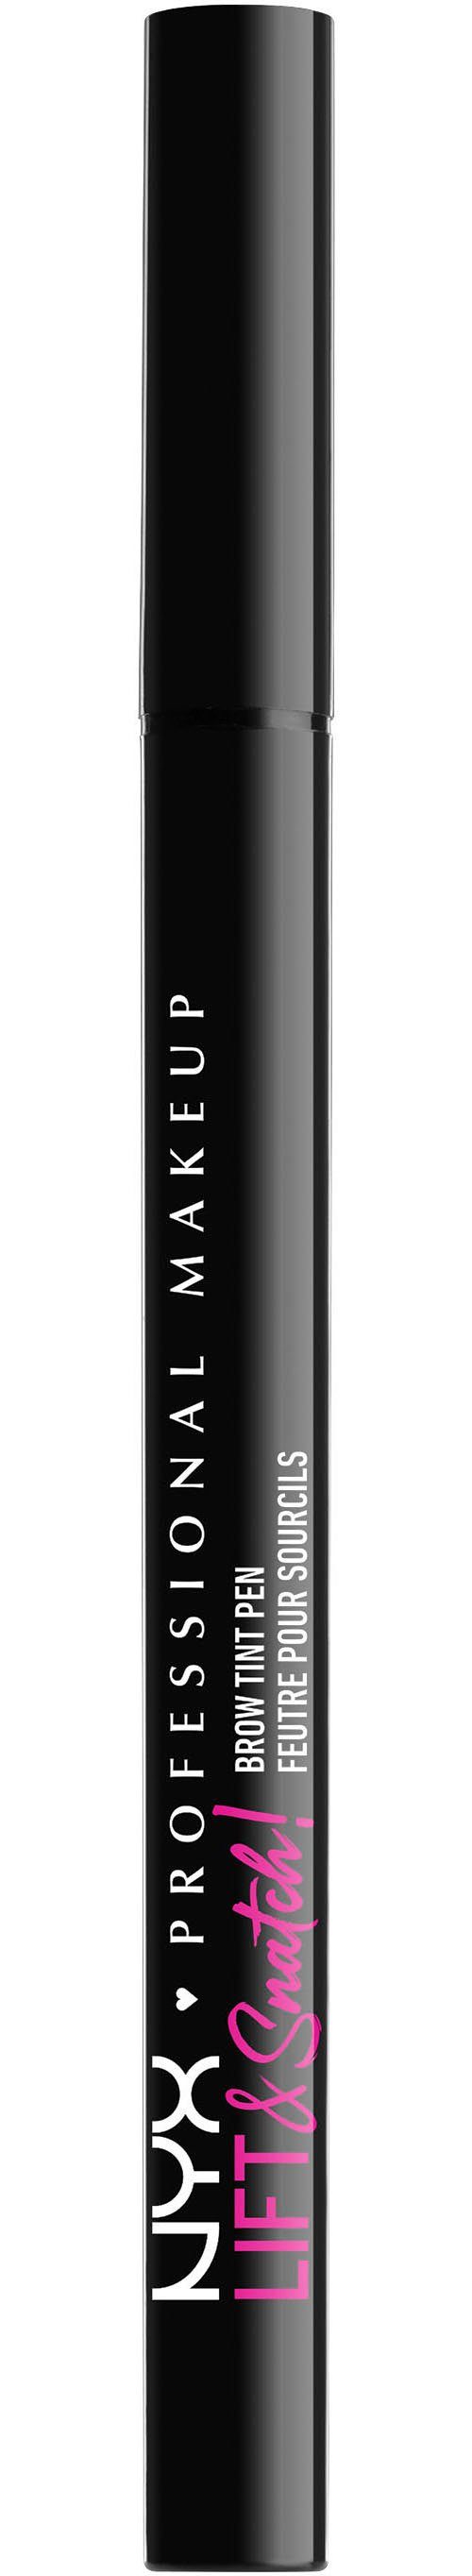 ash Augenbrauen-Stift & NYX Snatch Makeup Brow brown Lift Pen Professional Tint